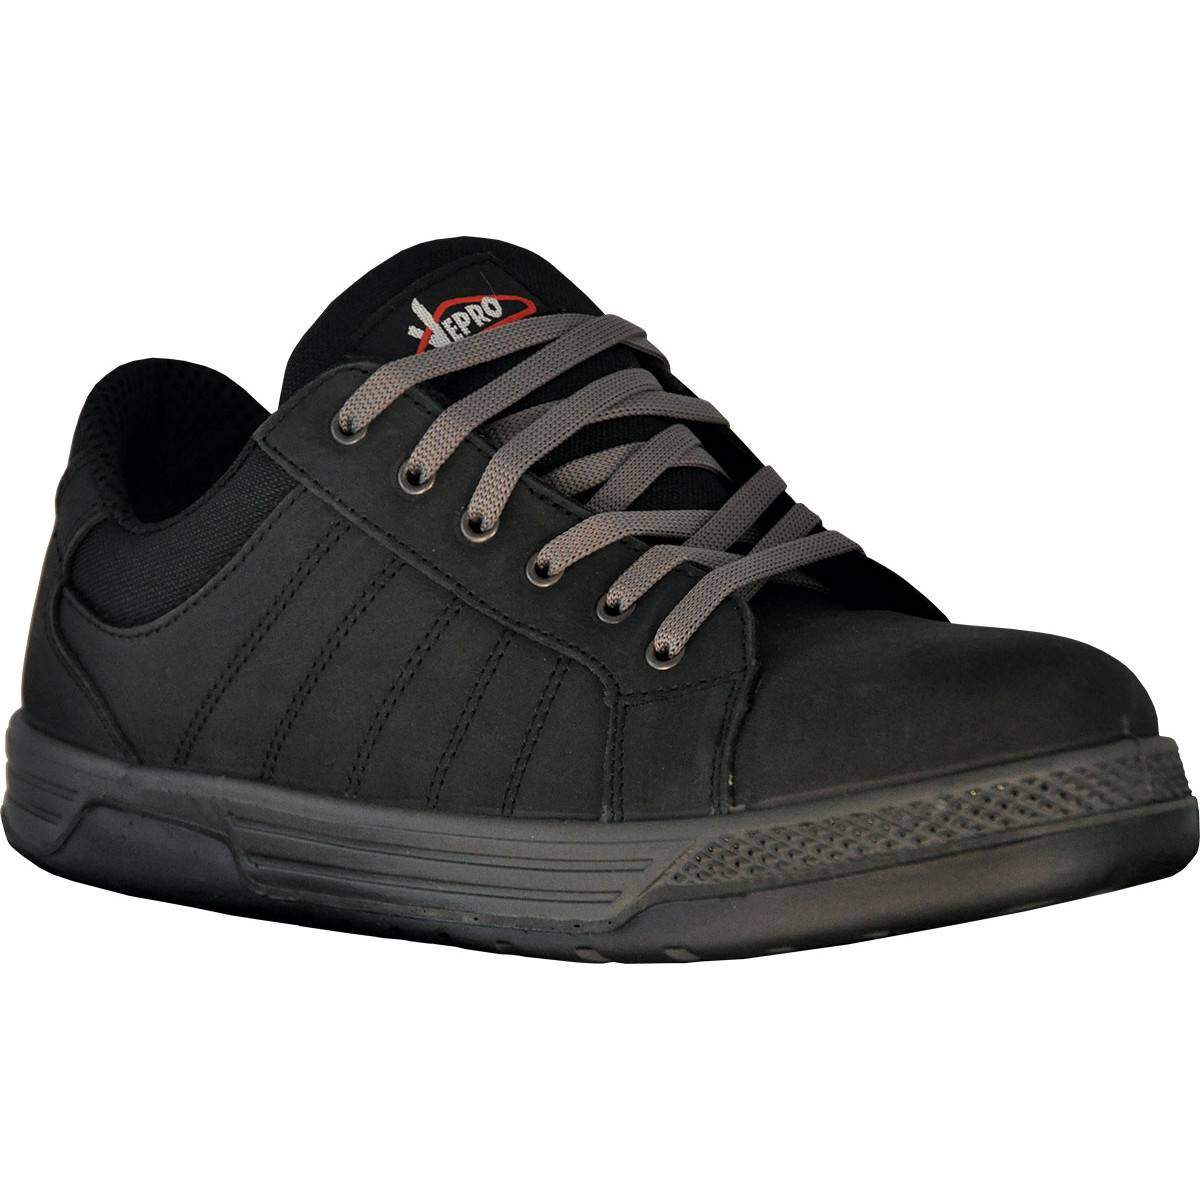 MANIBASSE low safety shoes size 41, black nubuck leather